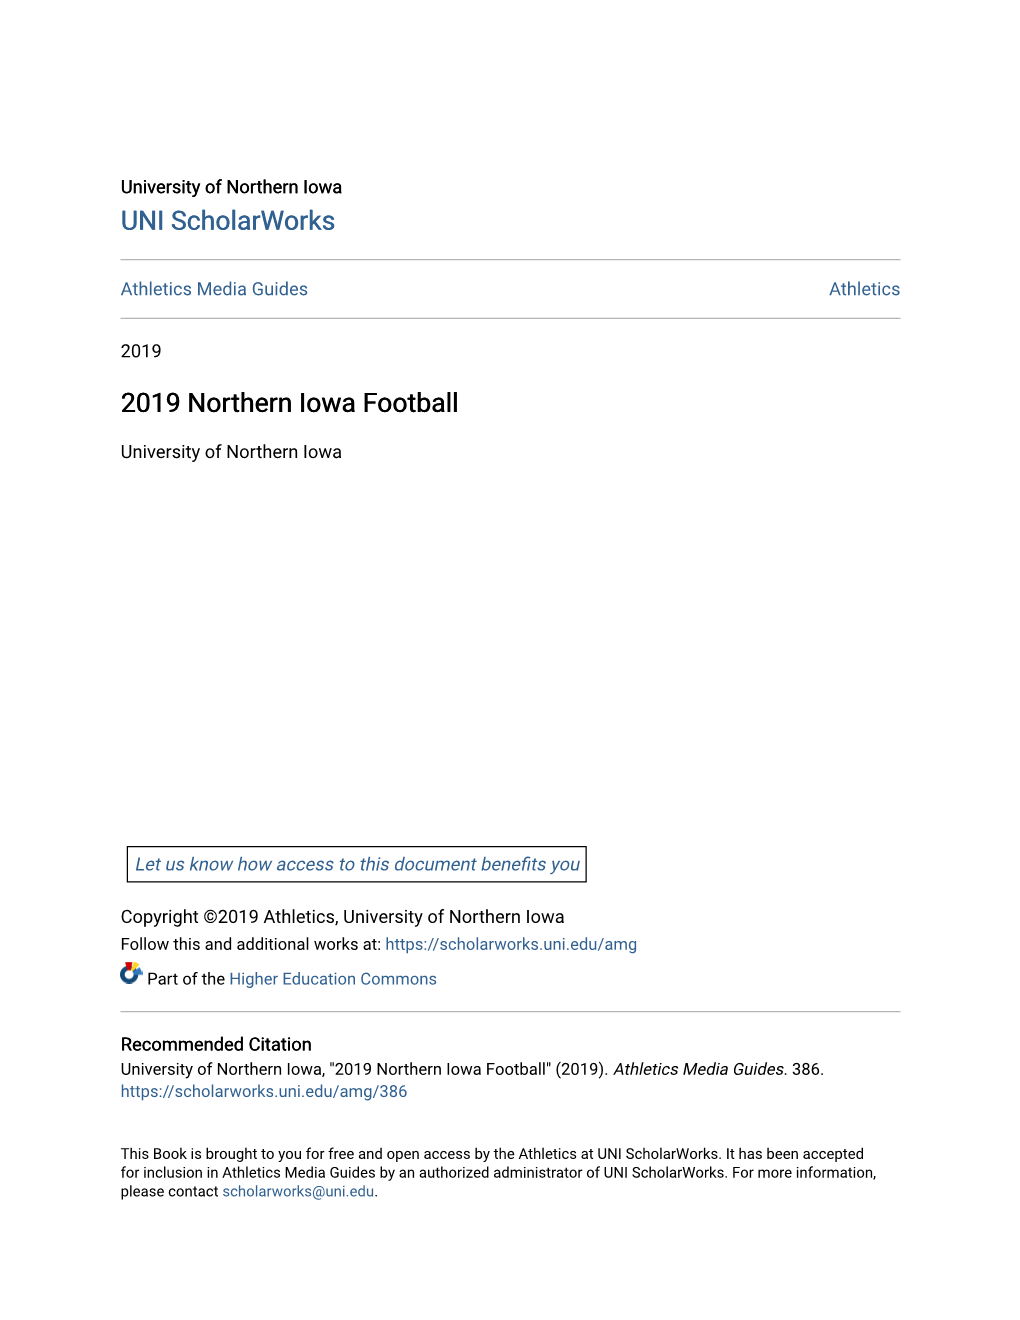 2019 Northern Iowa Football